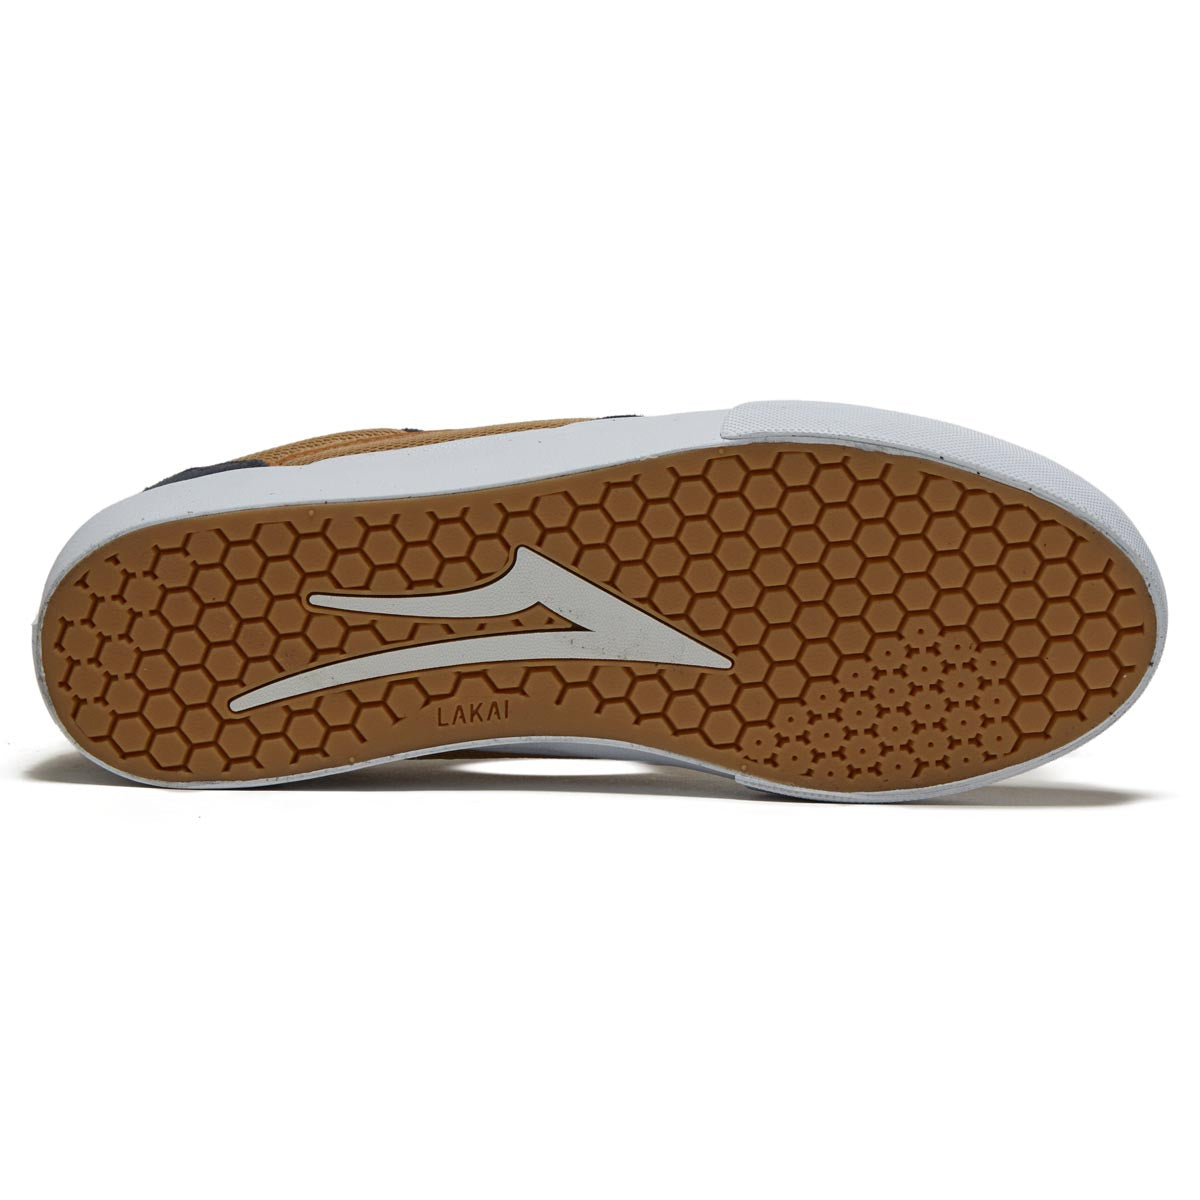 Lakai Atlantic Vulc Shoes - Charcoal/Tan Suede image 4